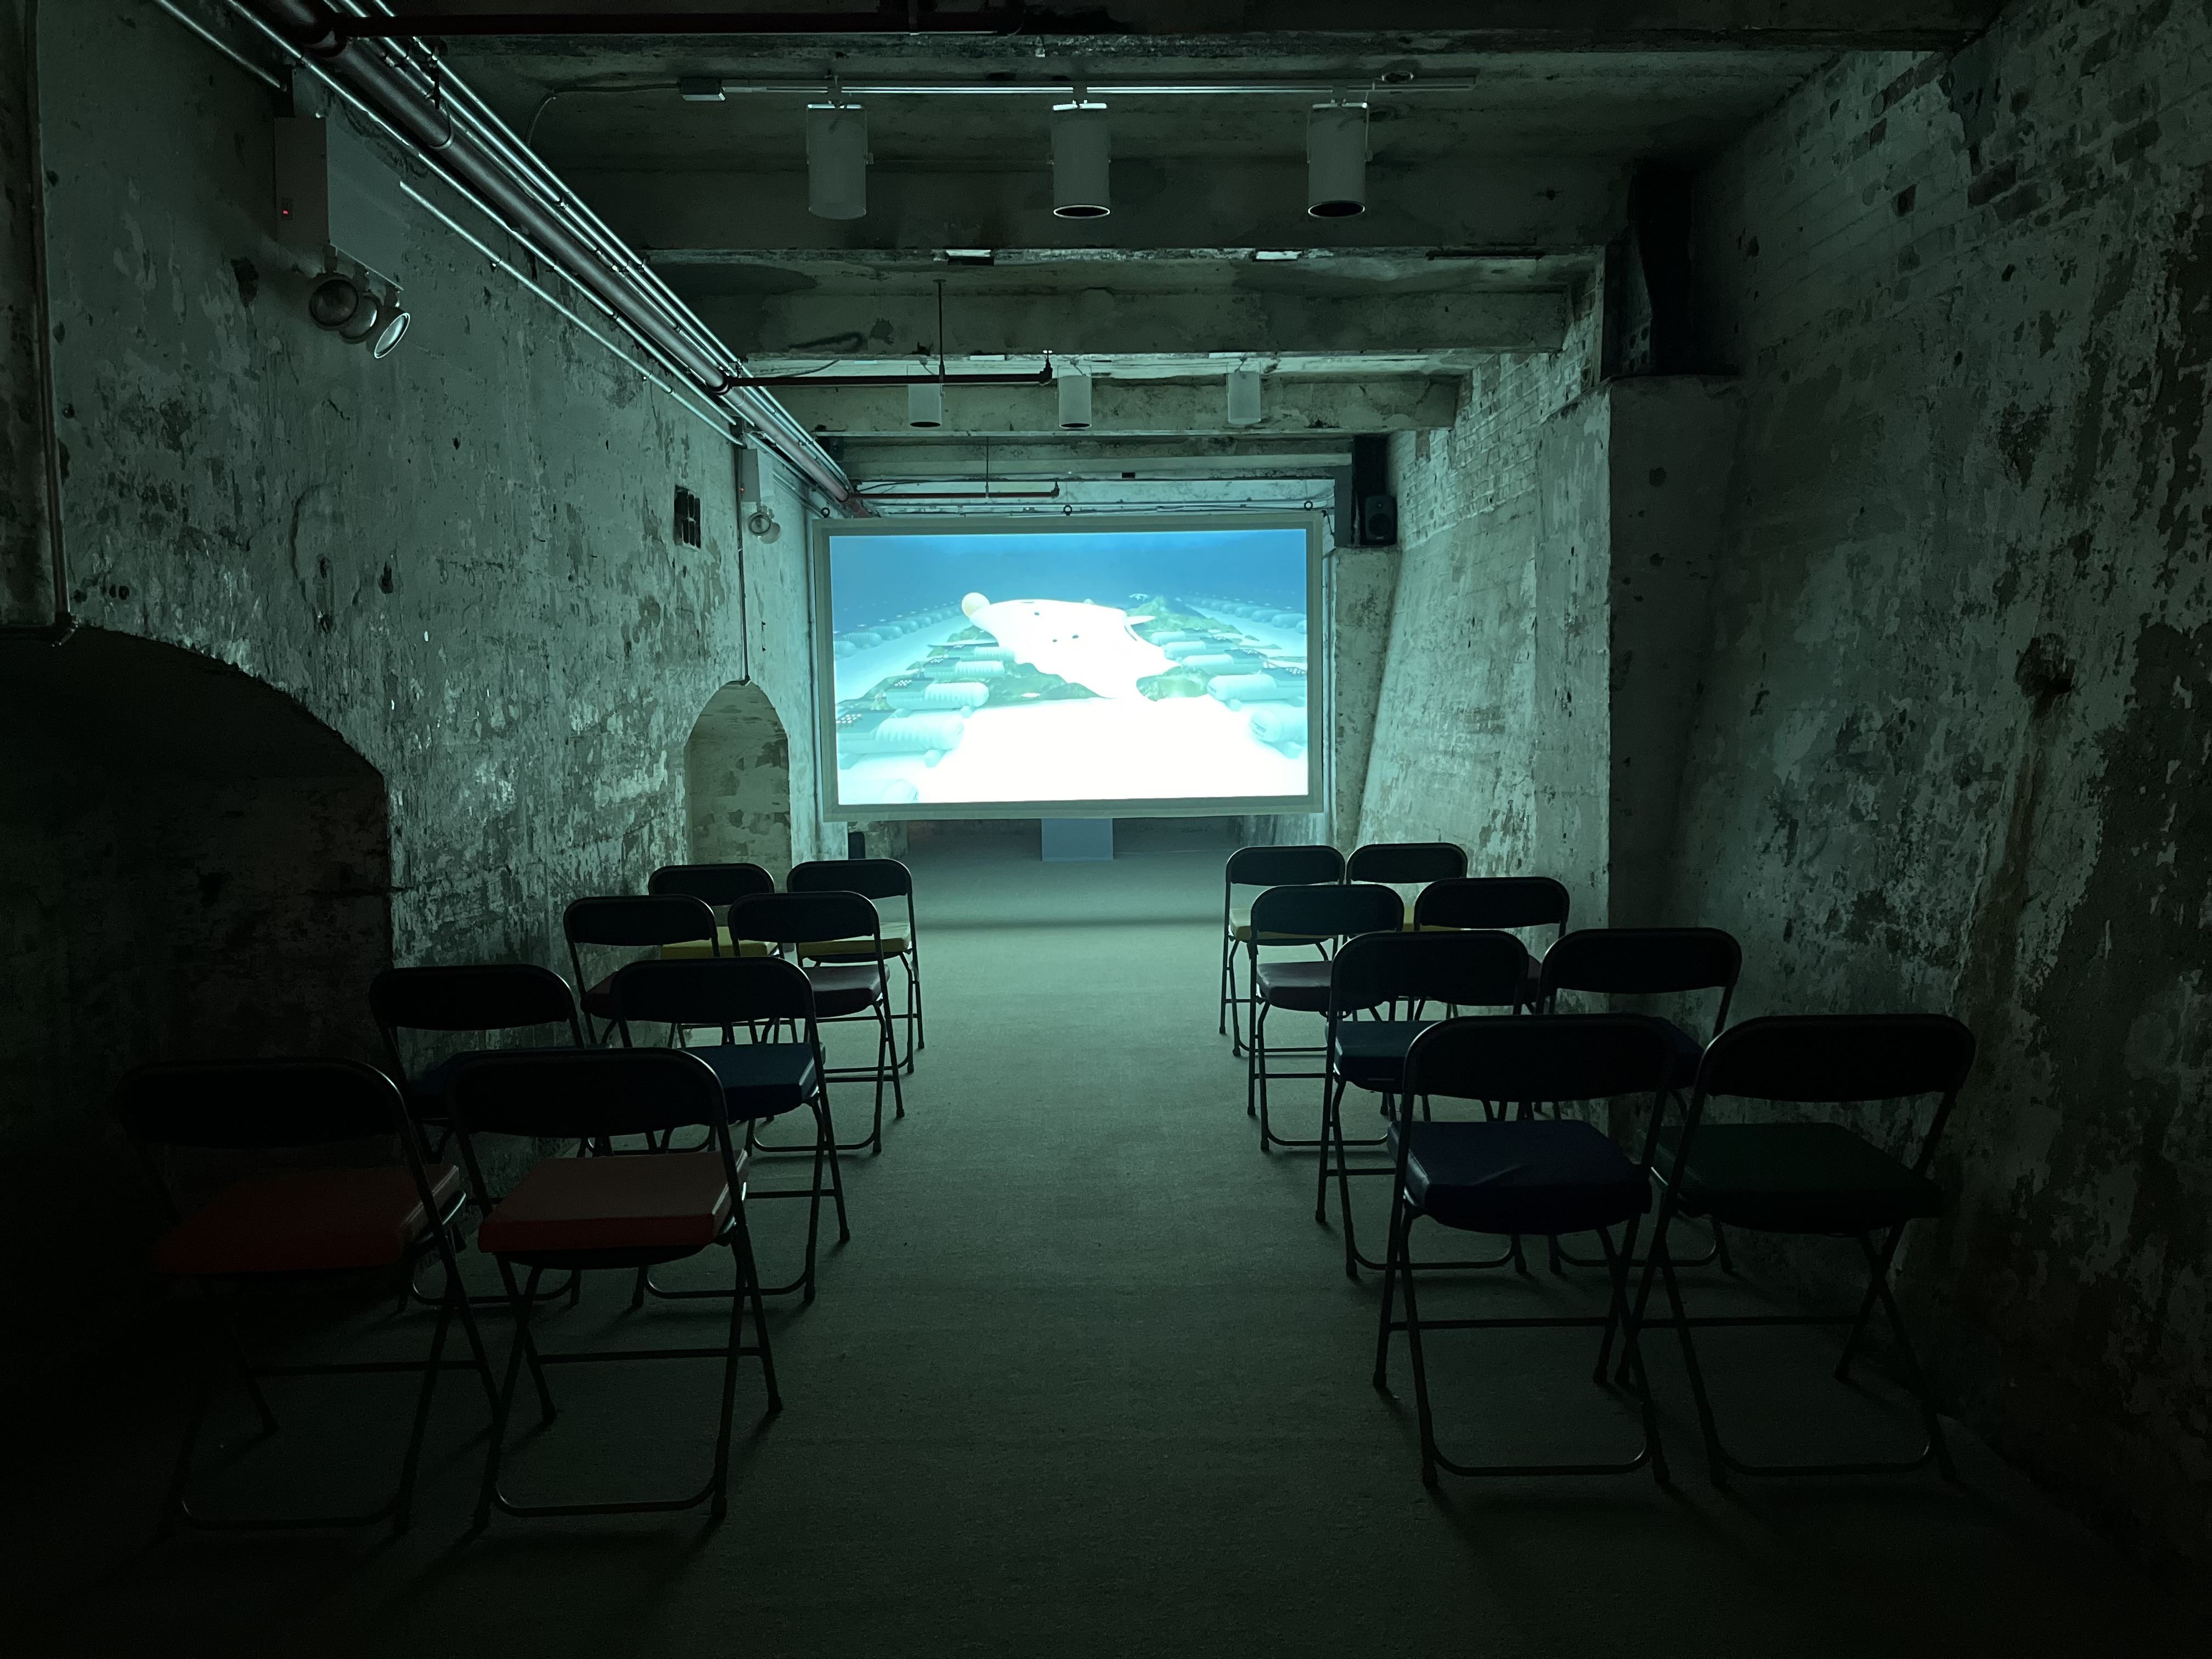 TFAM presents ‘Small World Cinema’ at New York’s SculptureCenter